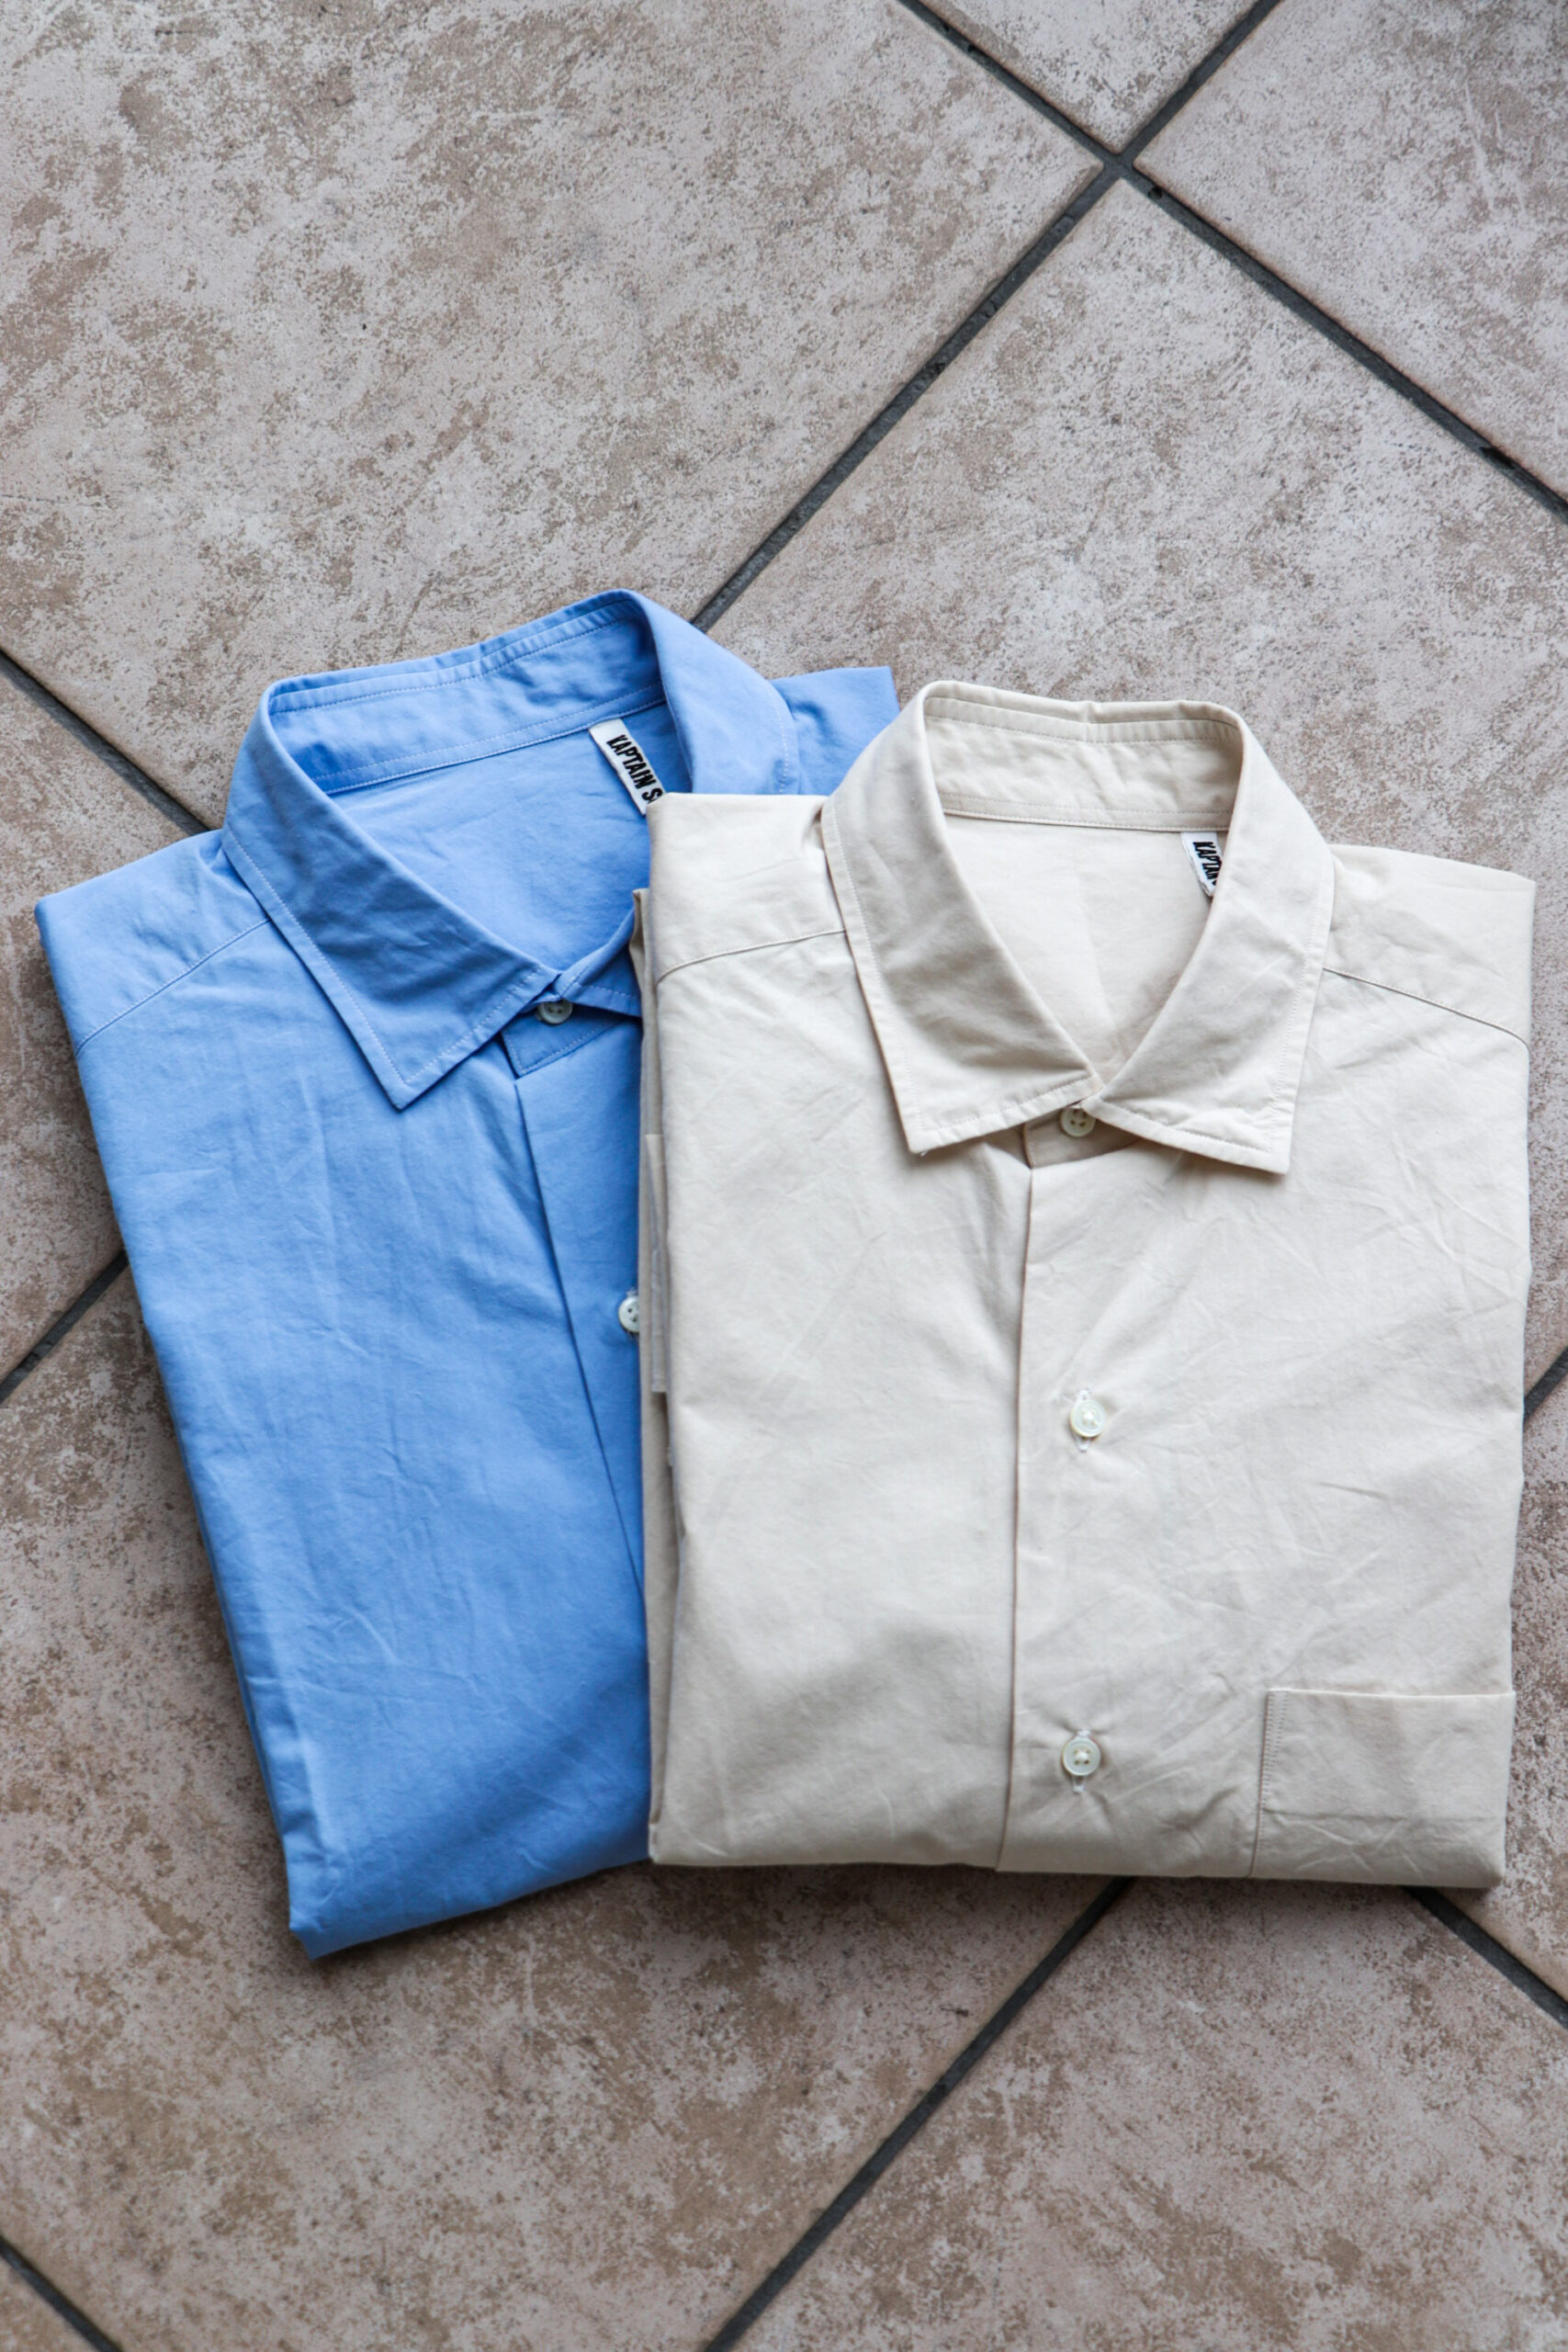 KAPTAIN SUNSHINE / “Cotton Semi Spread Collar Shirts” & “Military